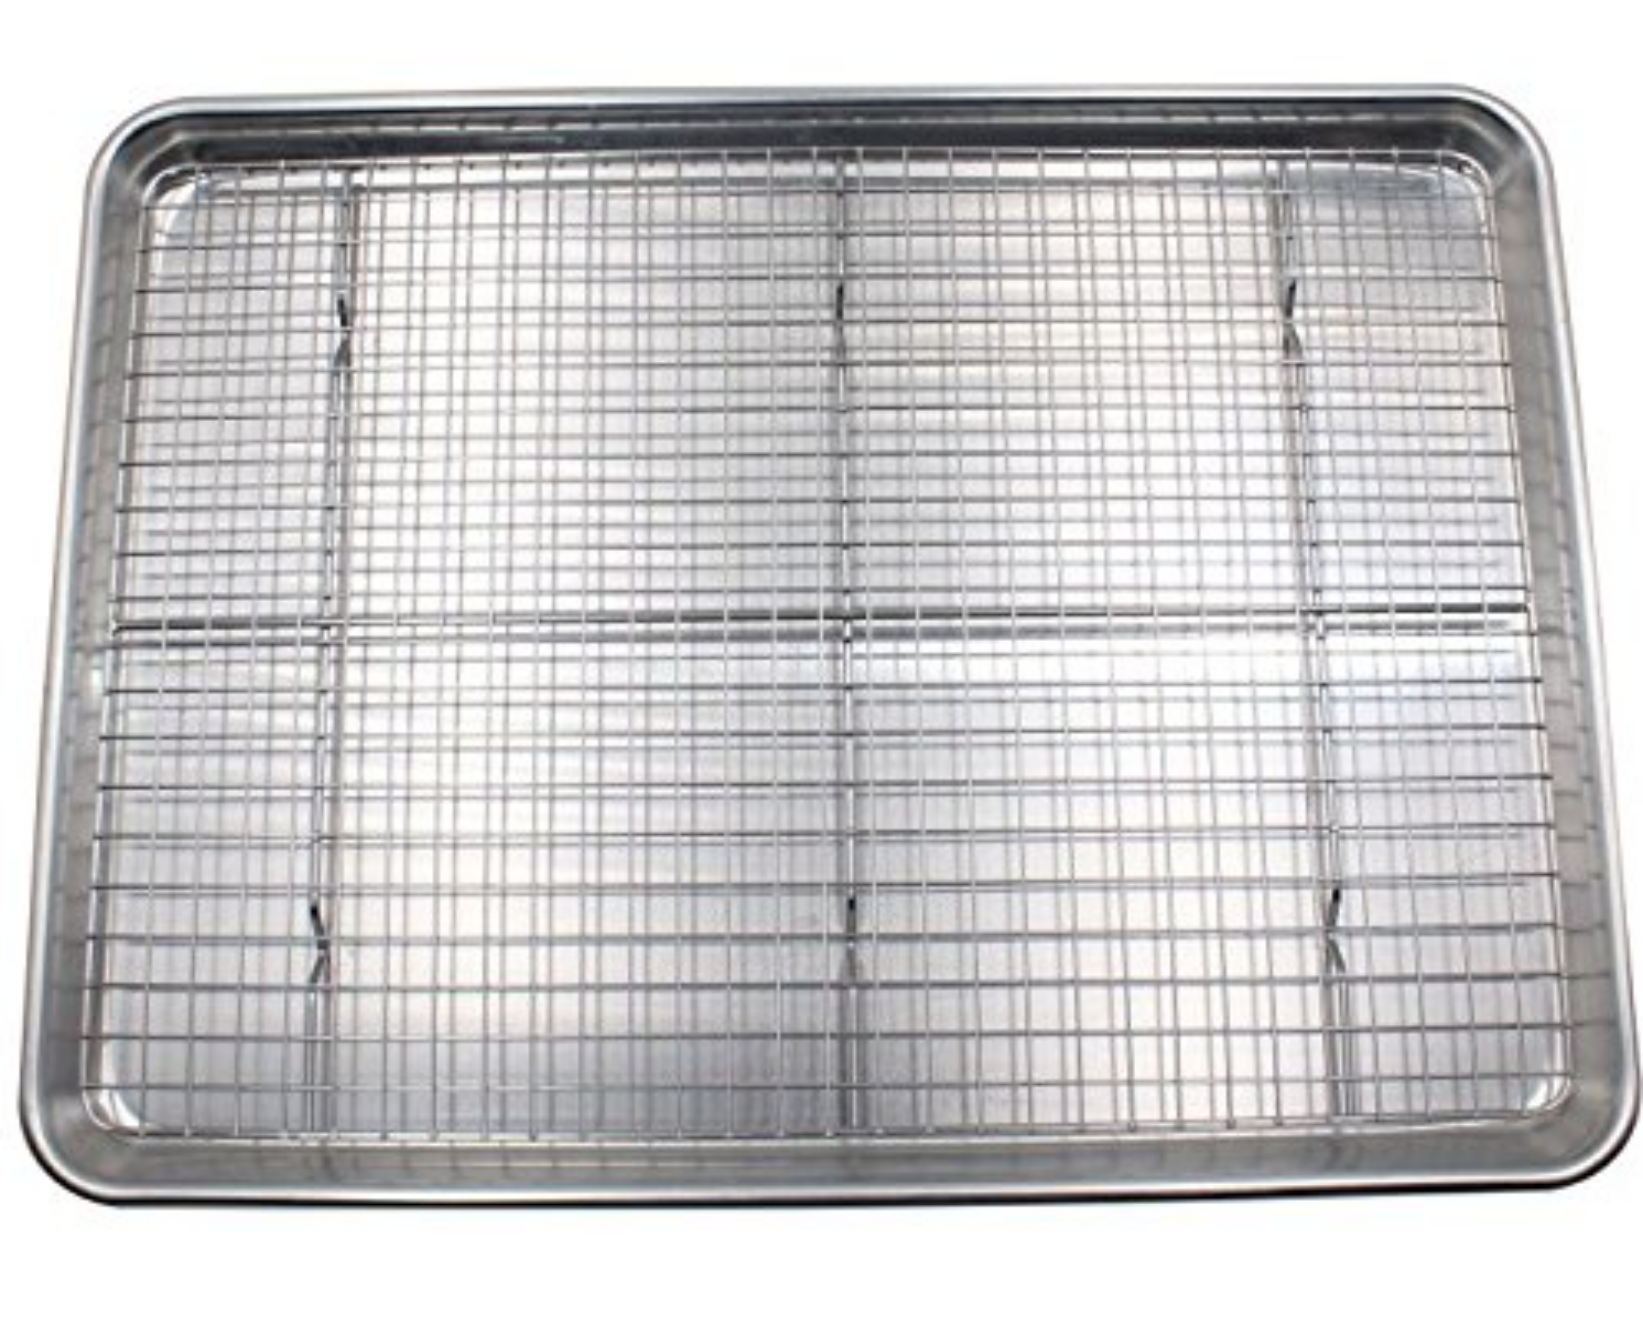 Aluminium baking sheet with Cooling Rack Chef